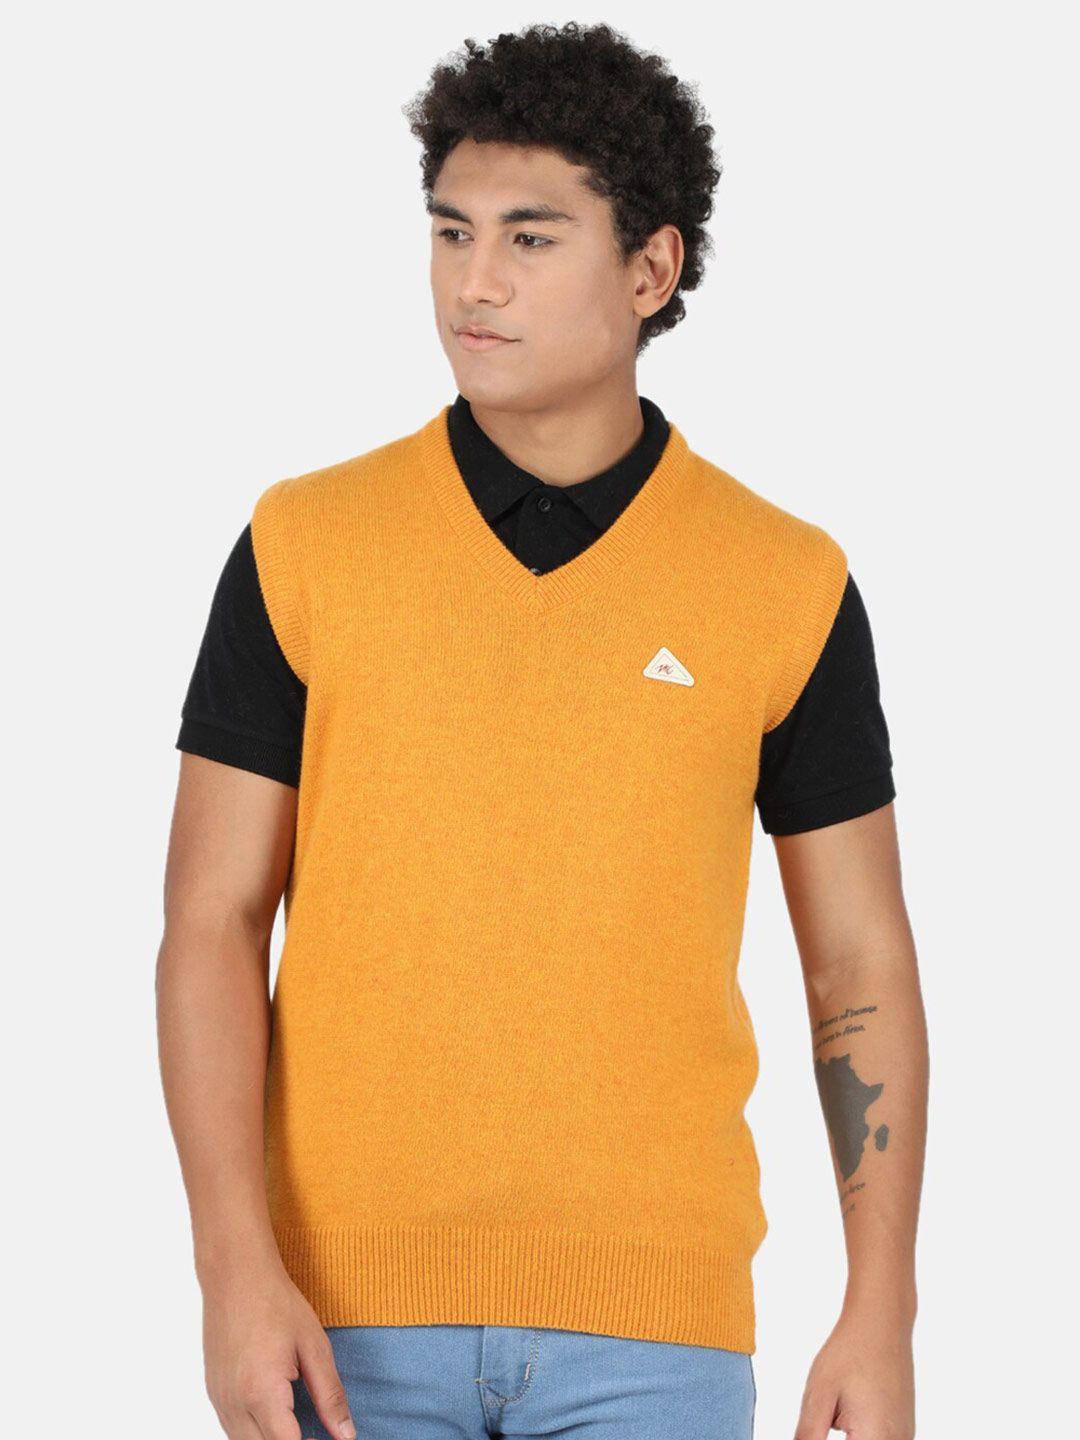 monte-carlo-men-yellow-cable-knit-sweater-vest